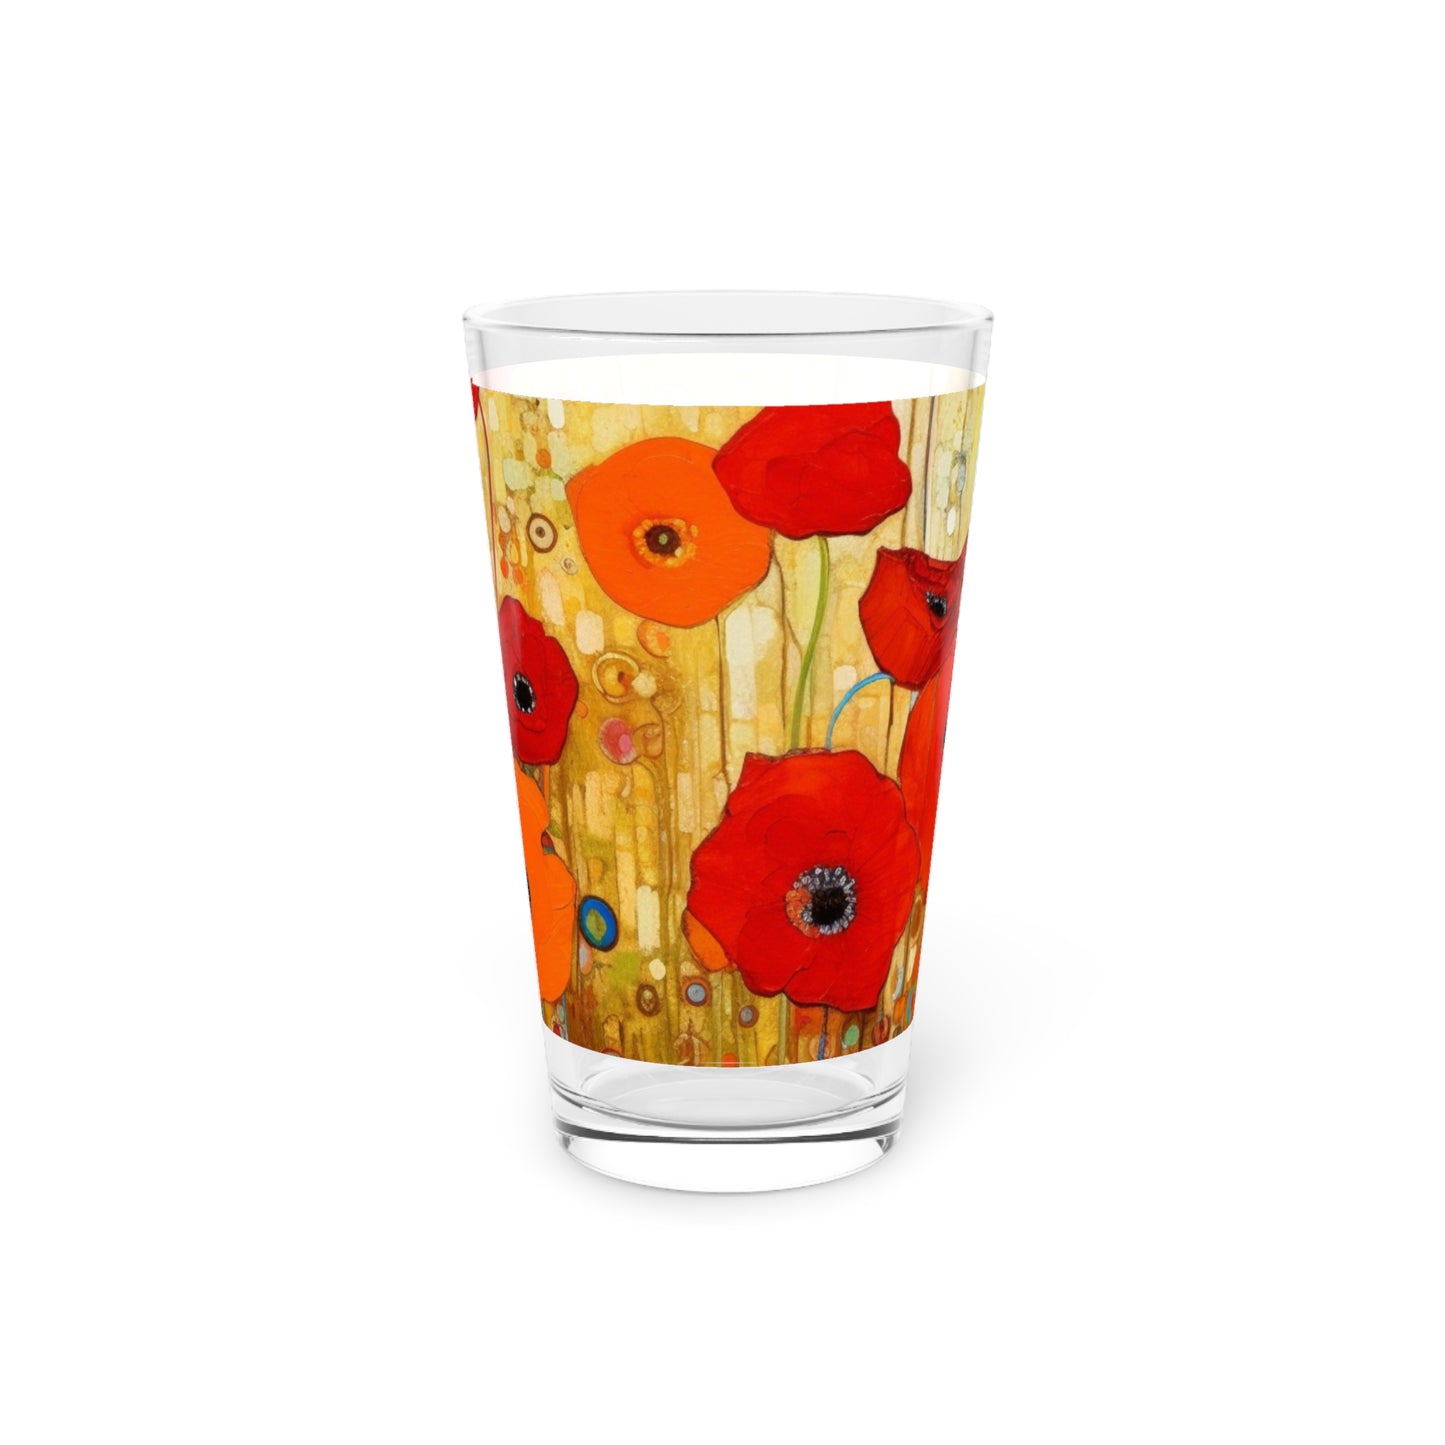 Floral Symphony: Pint Glass showcasing Gustav Klimt's Poppies in Art Nouveau